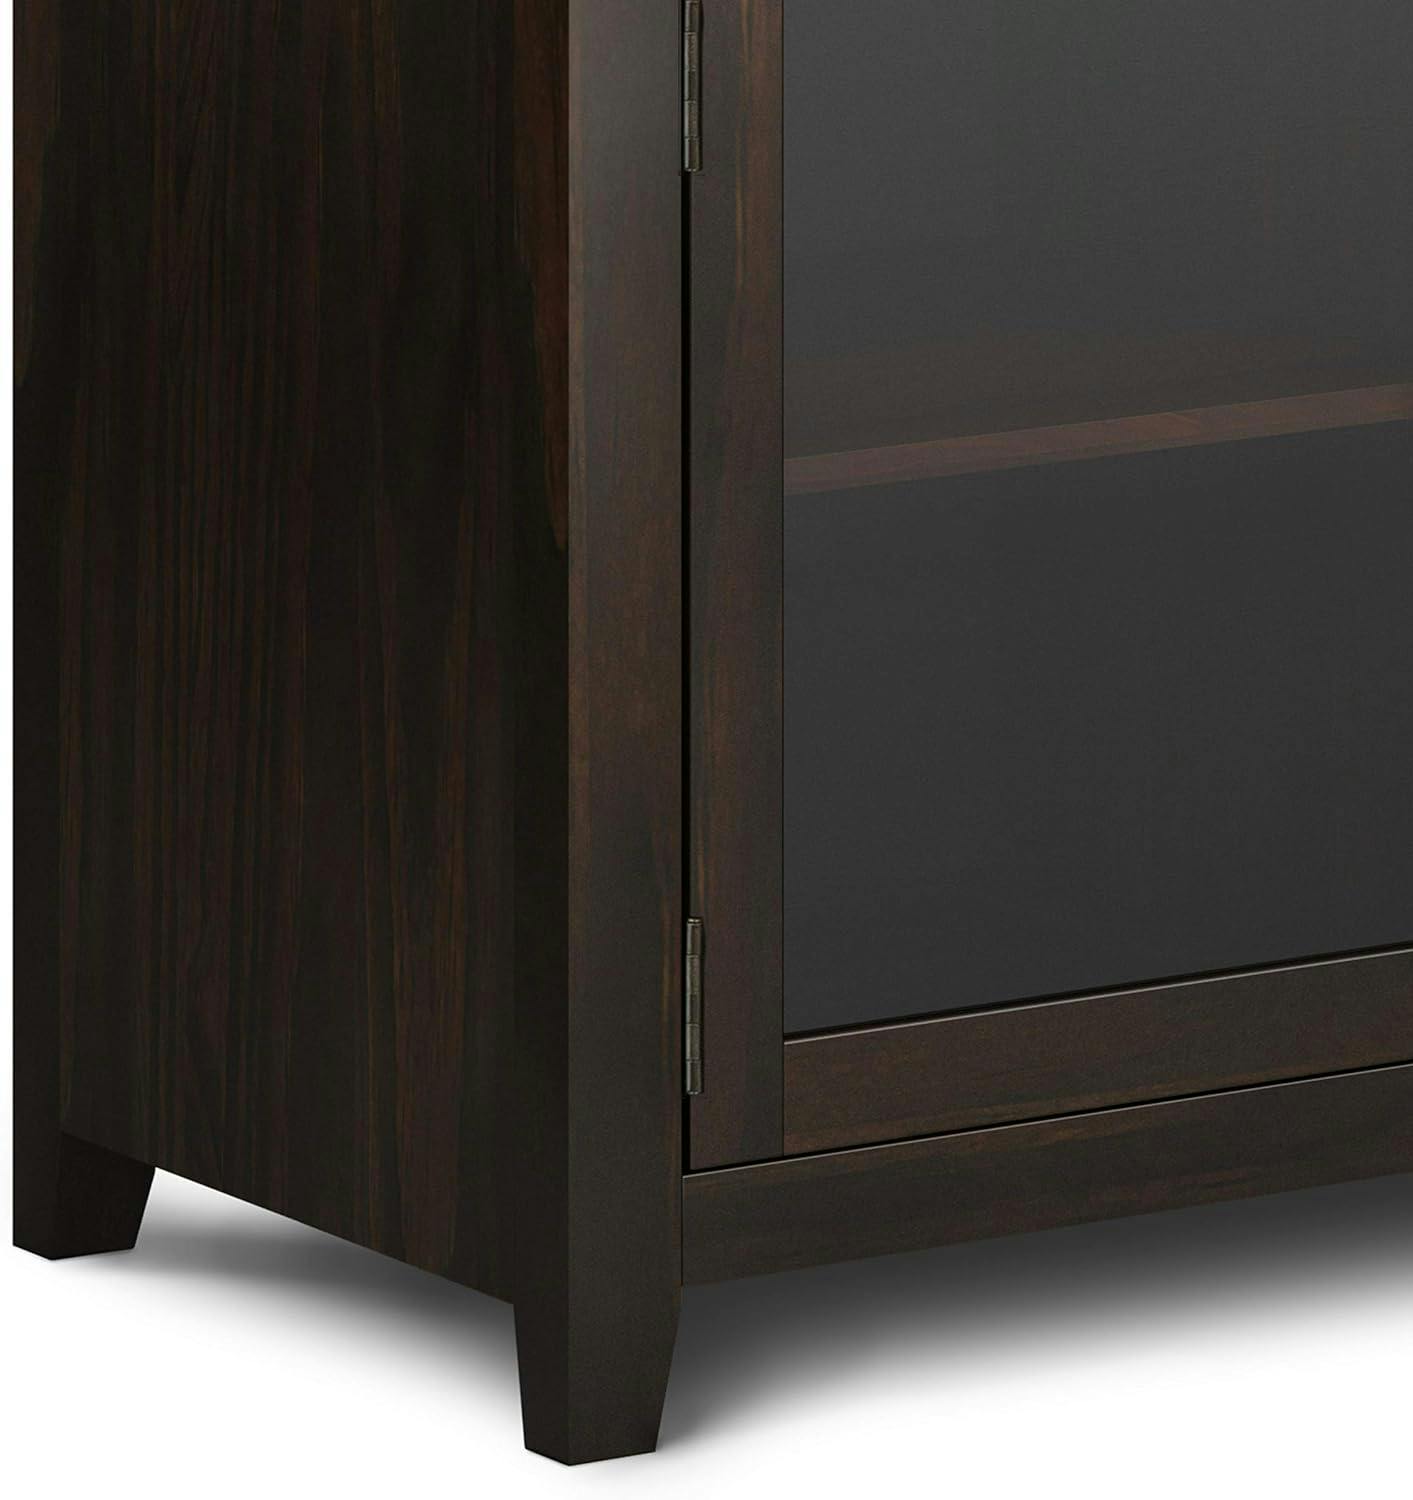 Cosmopolitan Mahogany Solid Wood 54" Wide Contemporary Sideboard Buffet